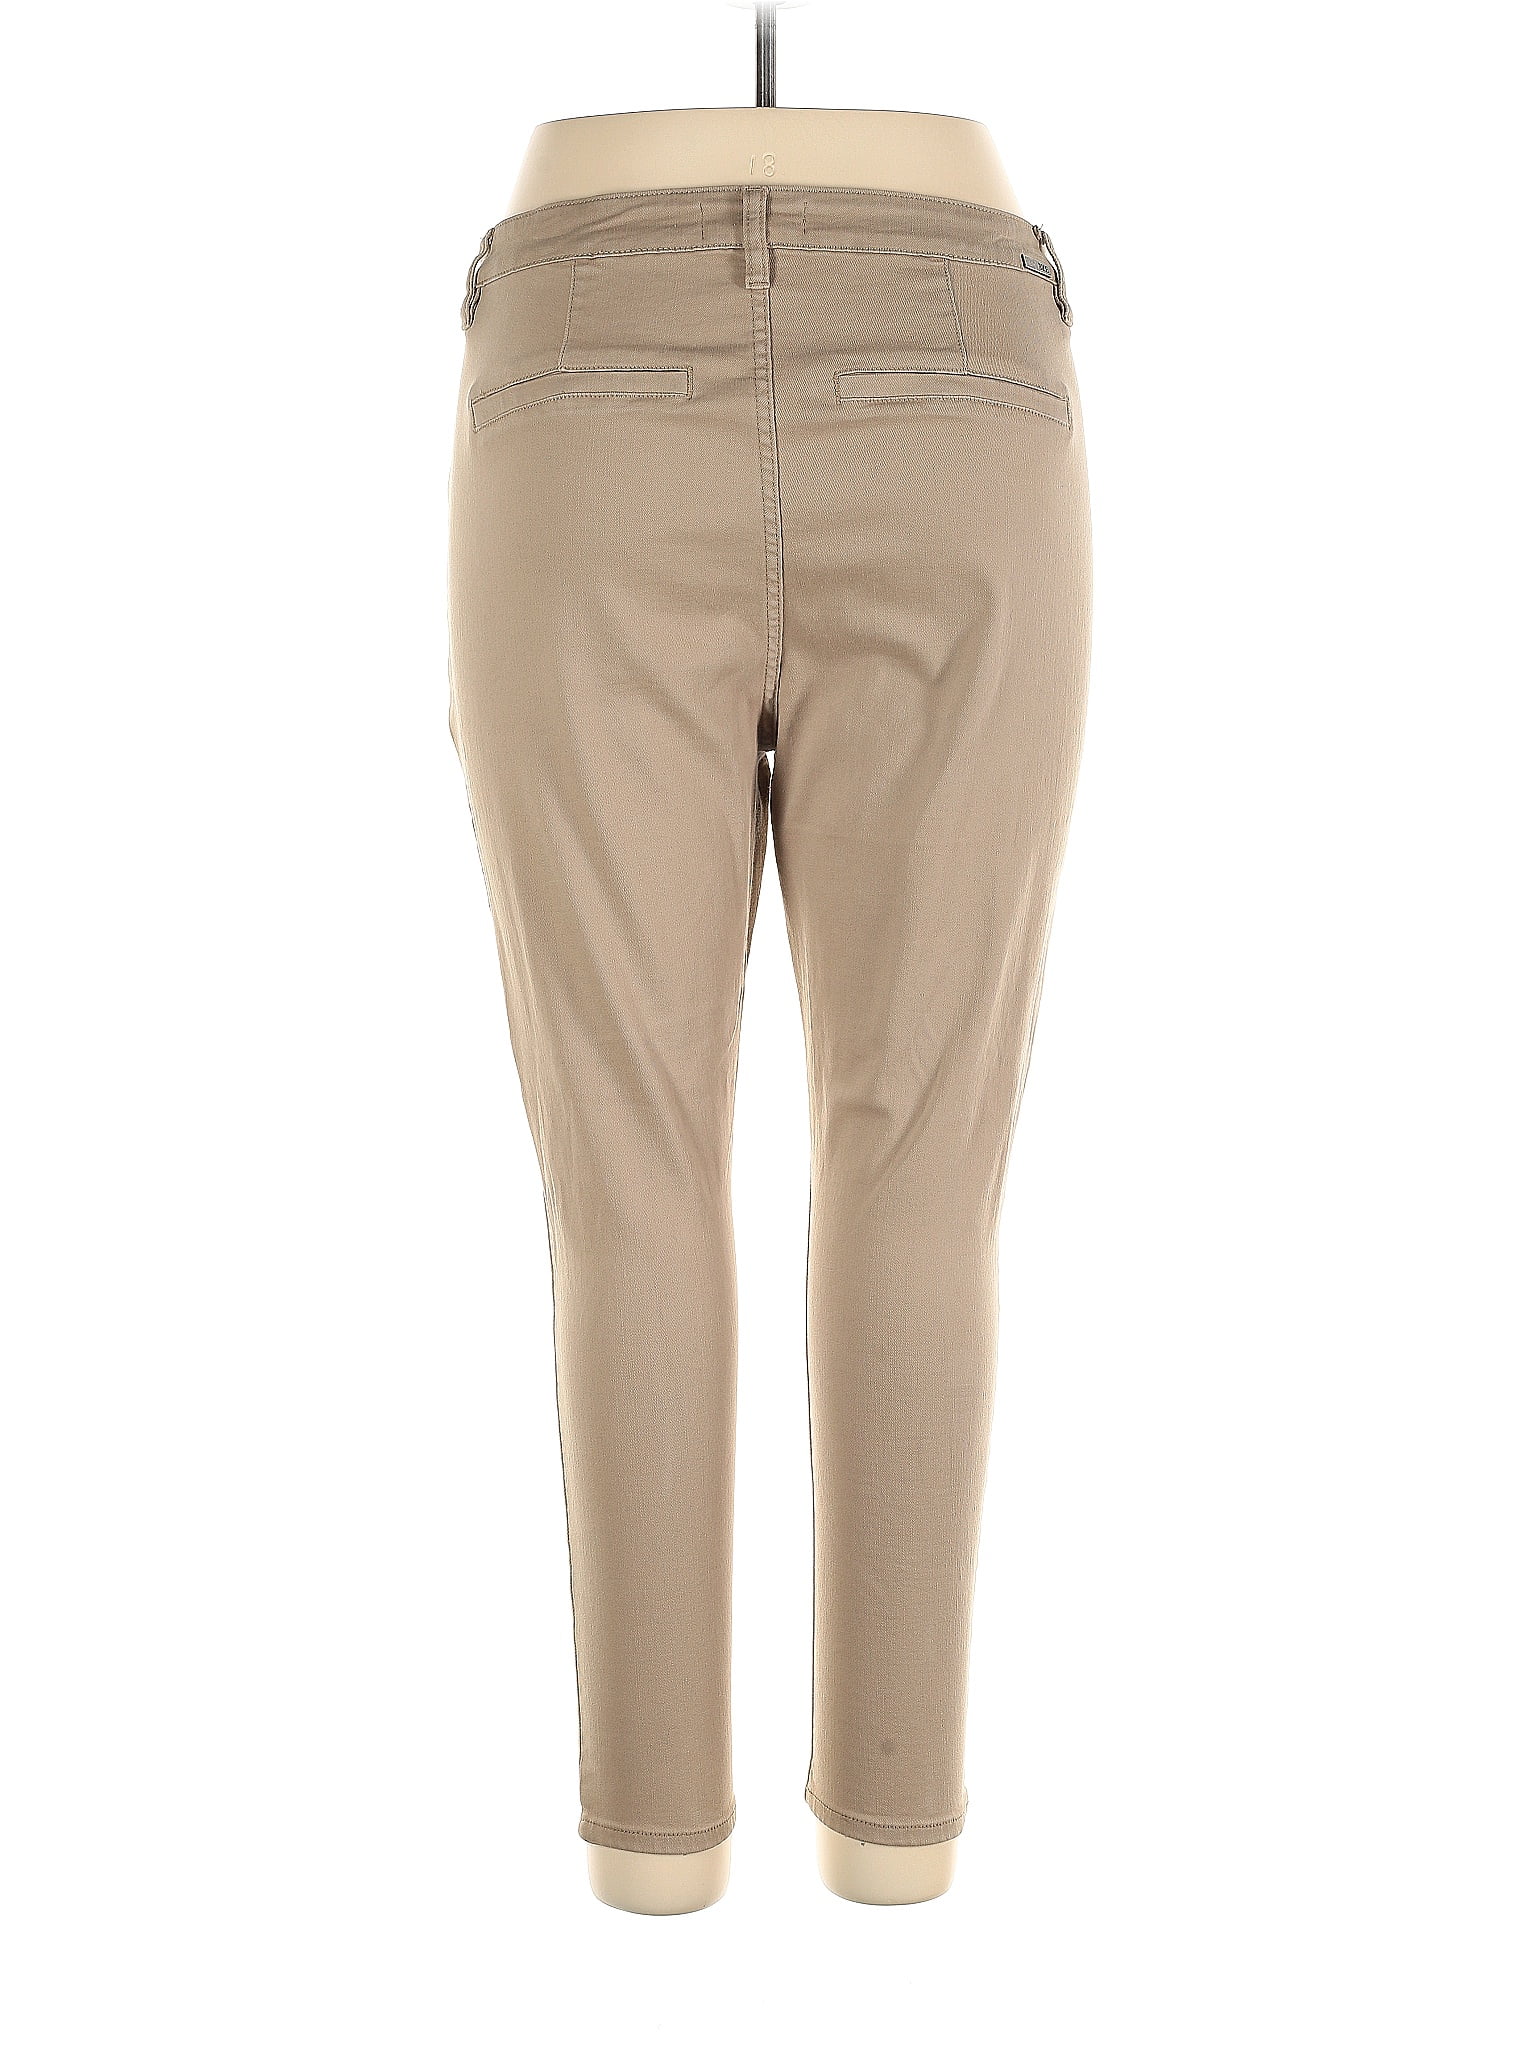 Halara Brown Active Pants Size XS - 56% off